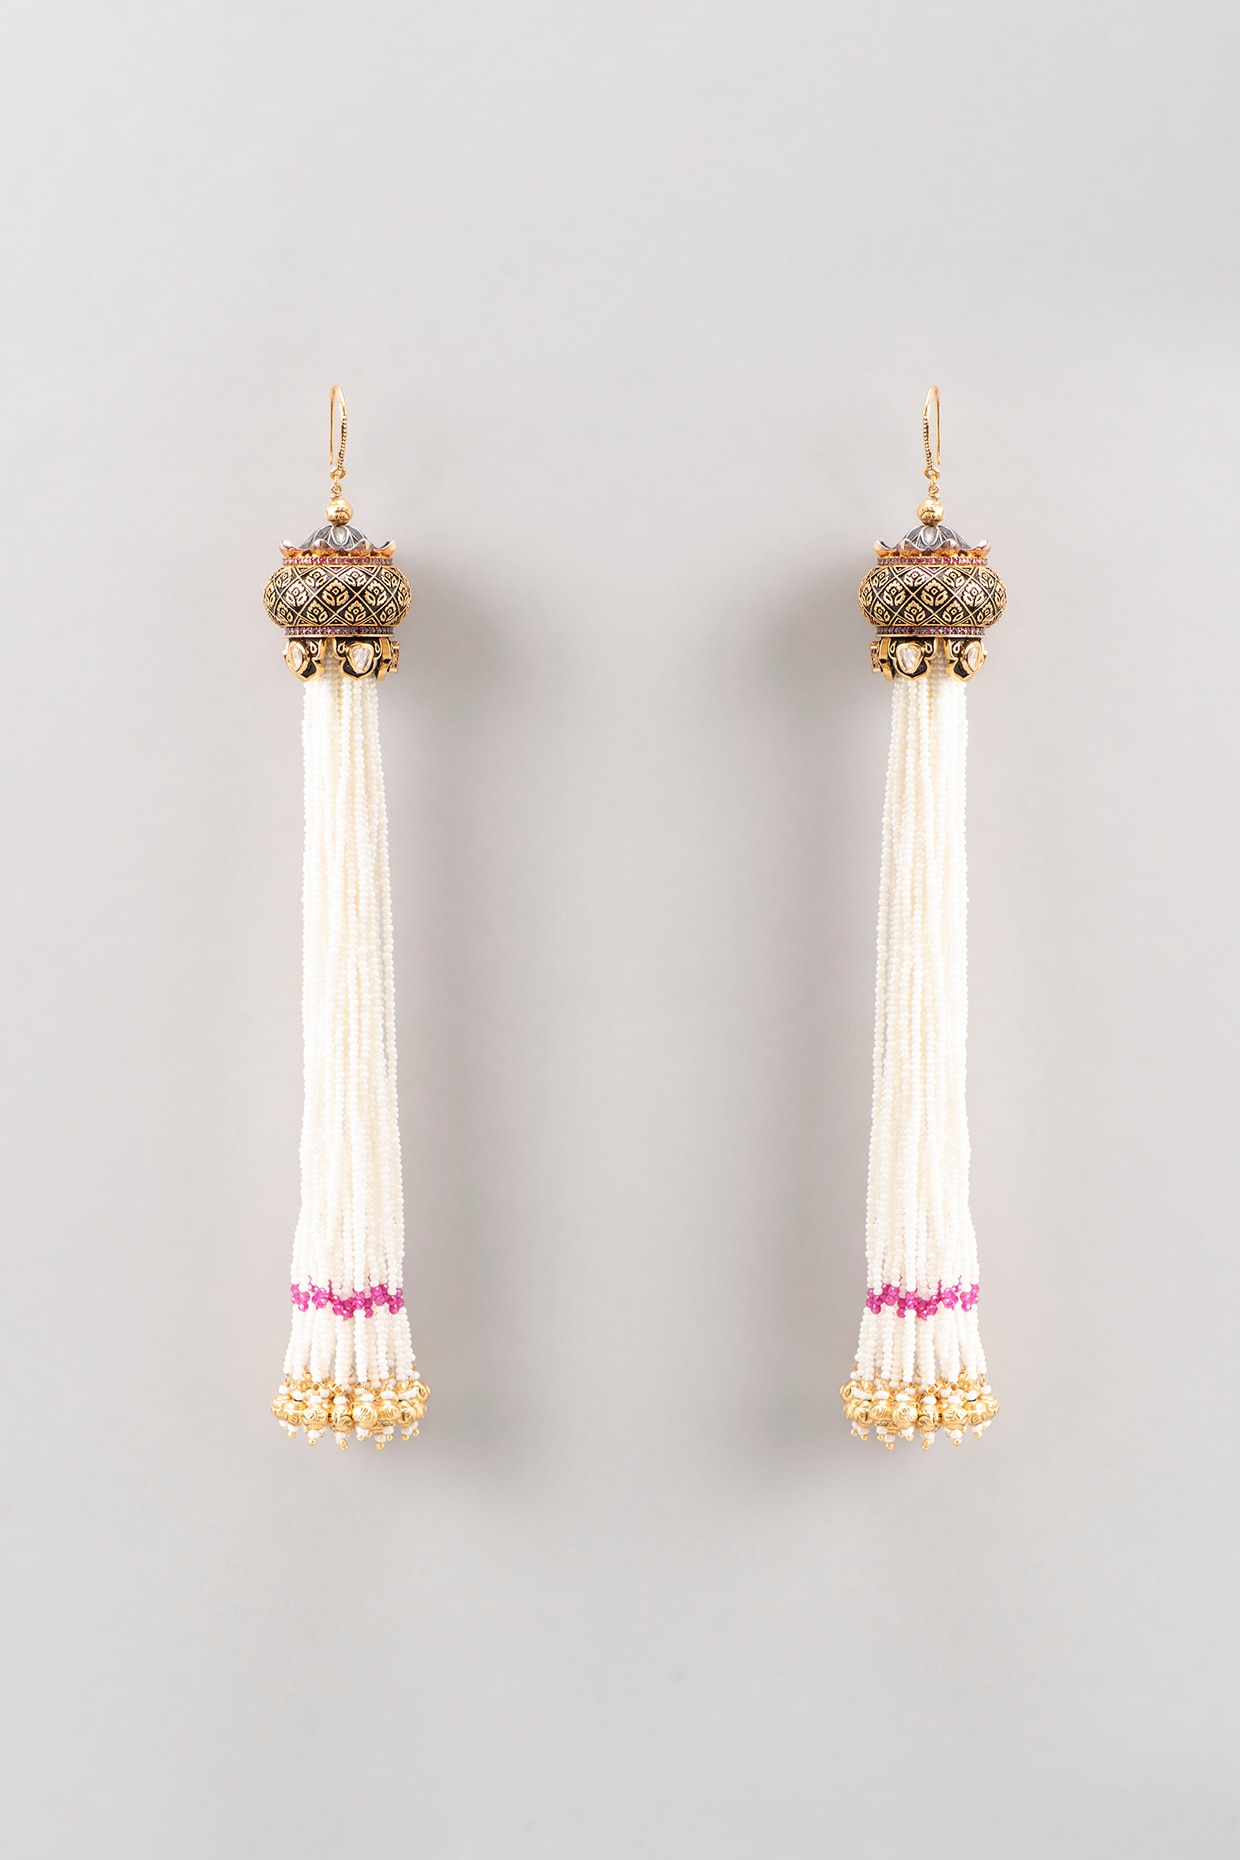 SHAARMS 18k Gold Tassel Earrings for Women Long Spike Chain India | Ubuy